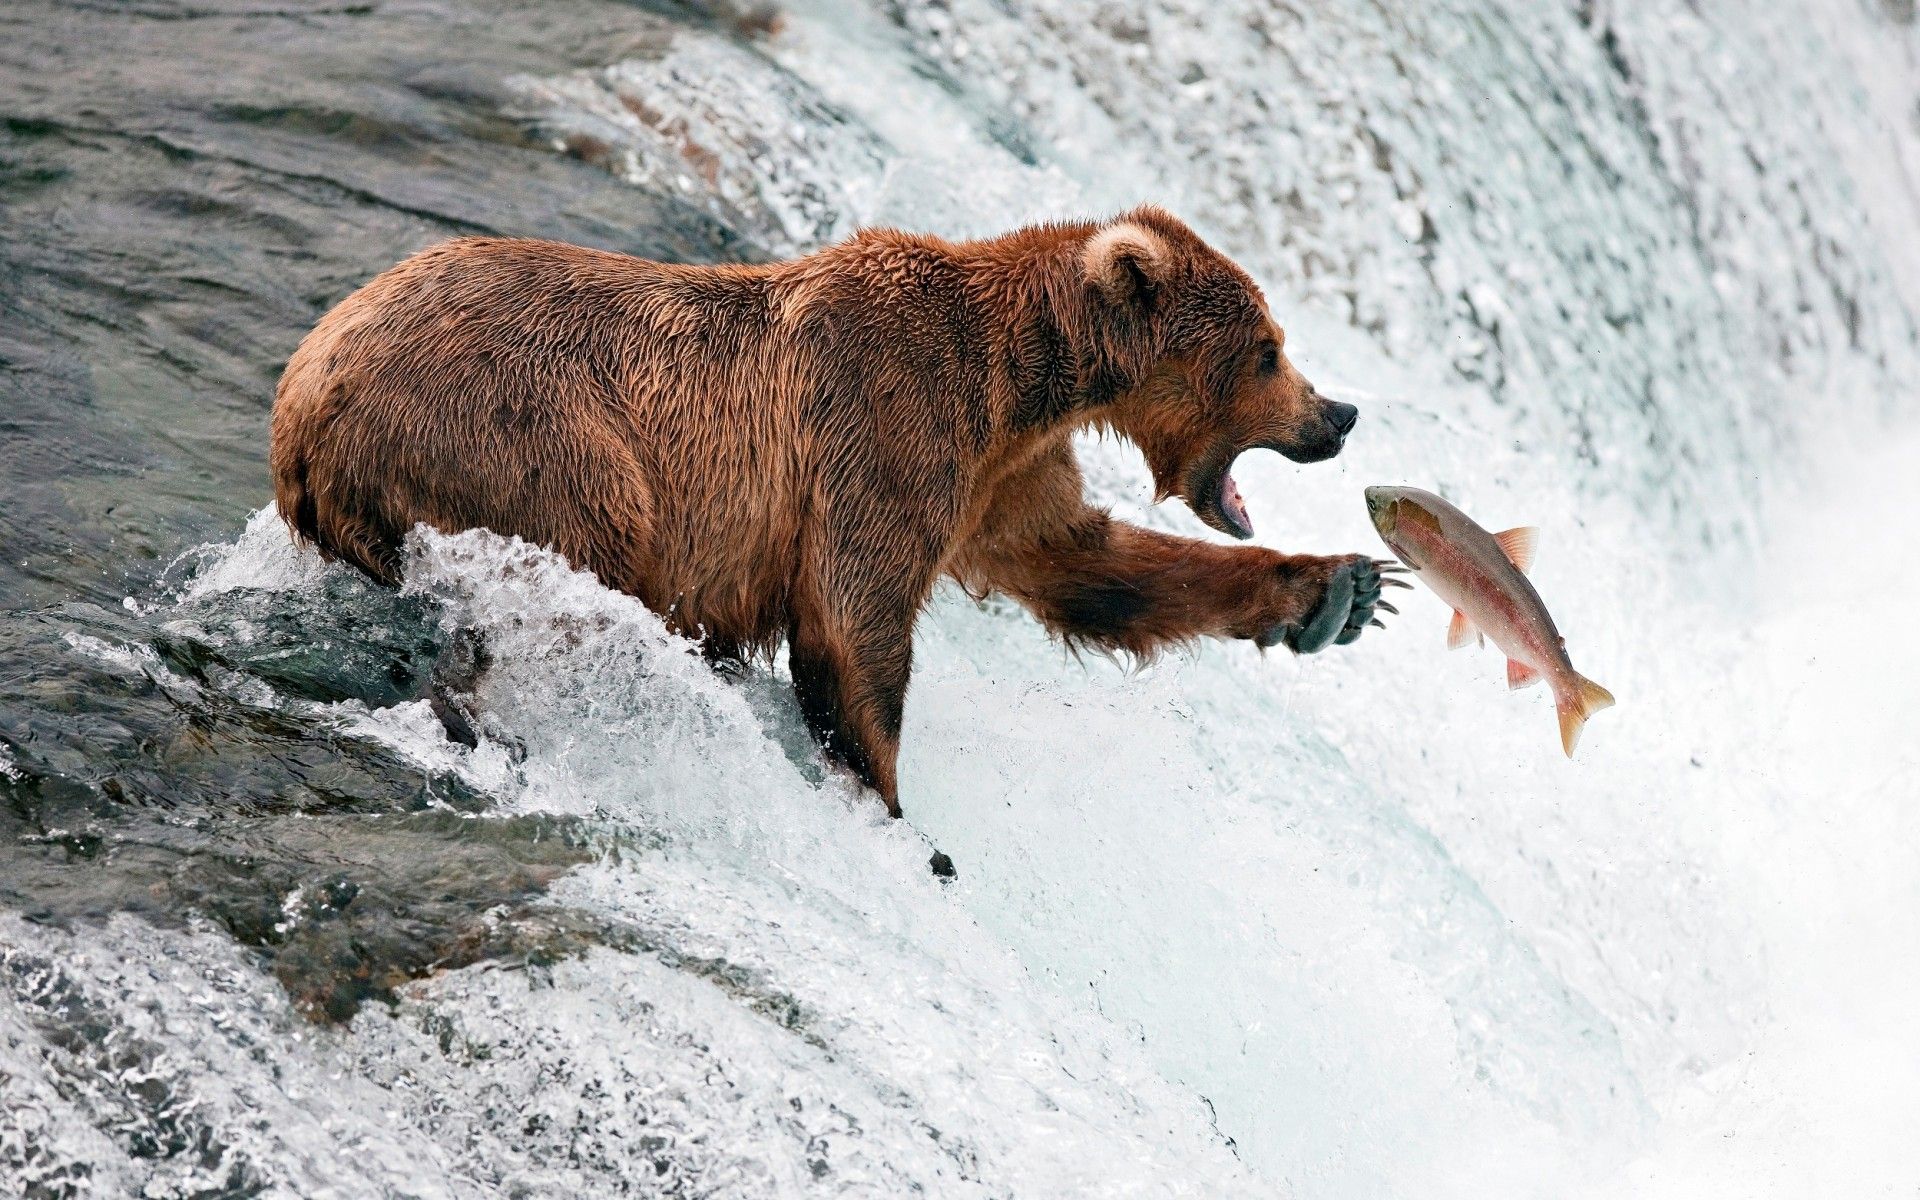 Bear Wallpaper, river, stream, fish, fishing | HD Wallpapers Photo ...